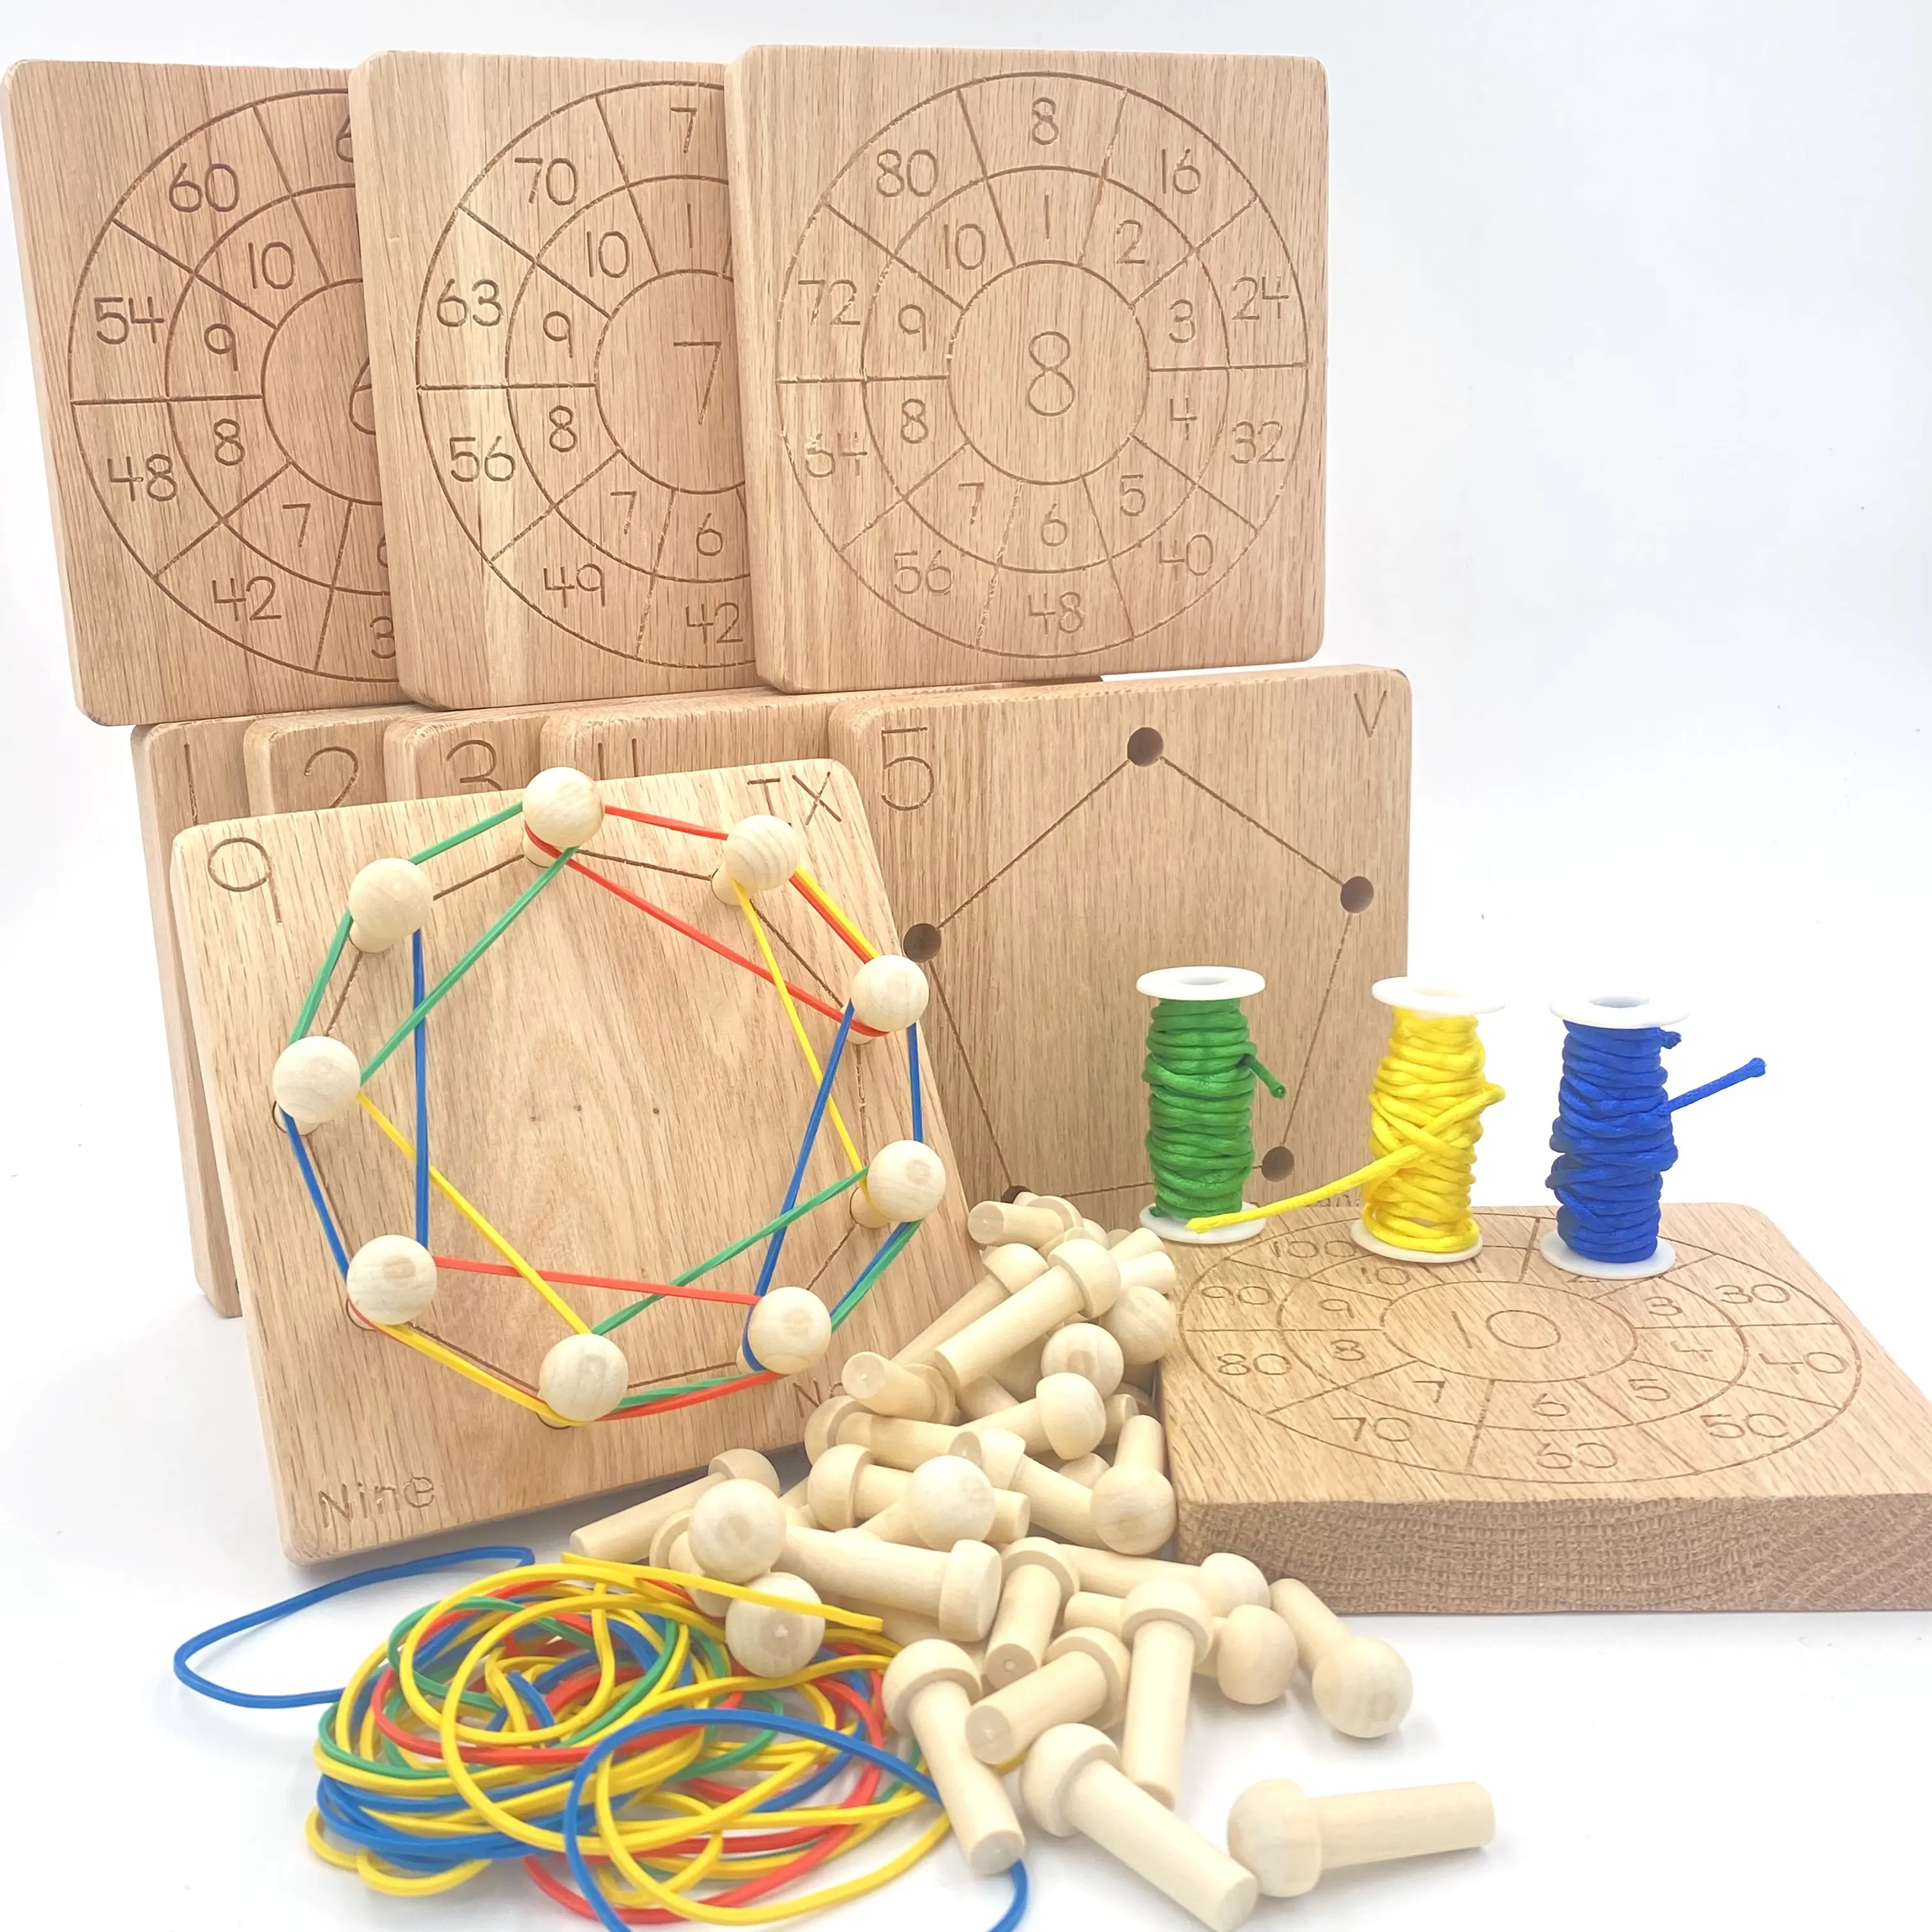 2023 Kids Math Study Toy Mathematics Teaching Aids Digital Matching Box Children's Early Educational Learning Wooden Toys